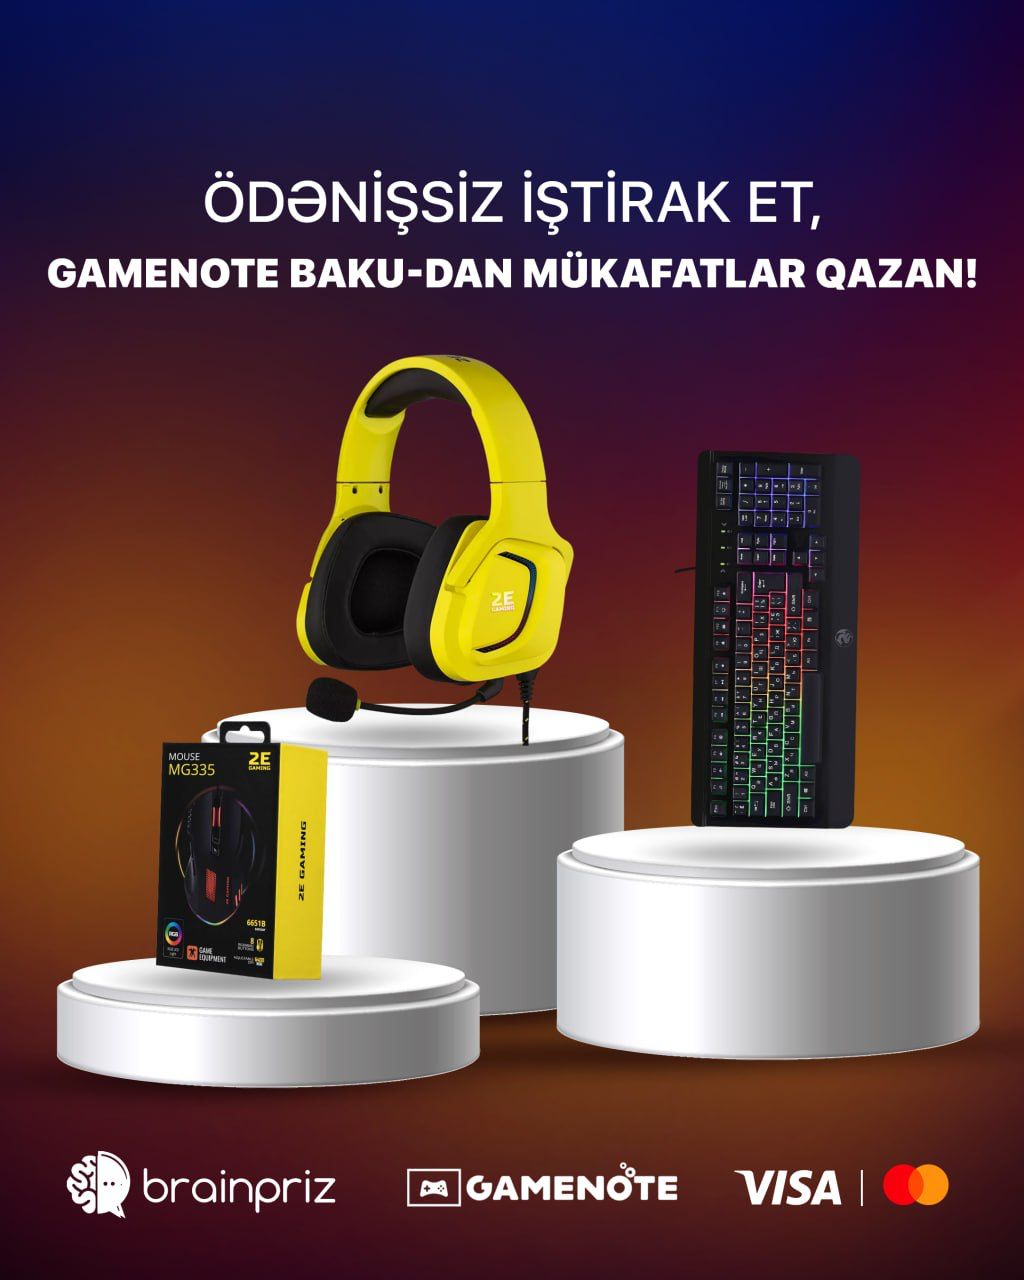 Gamenote Baku